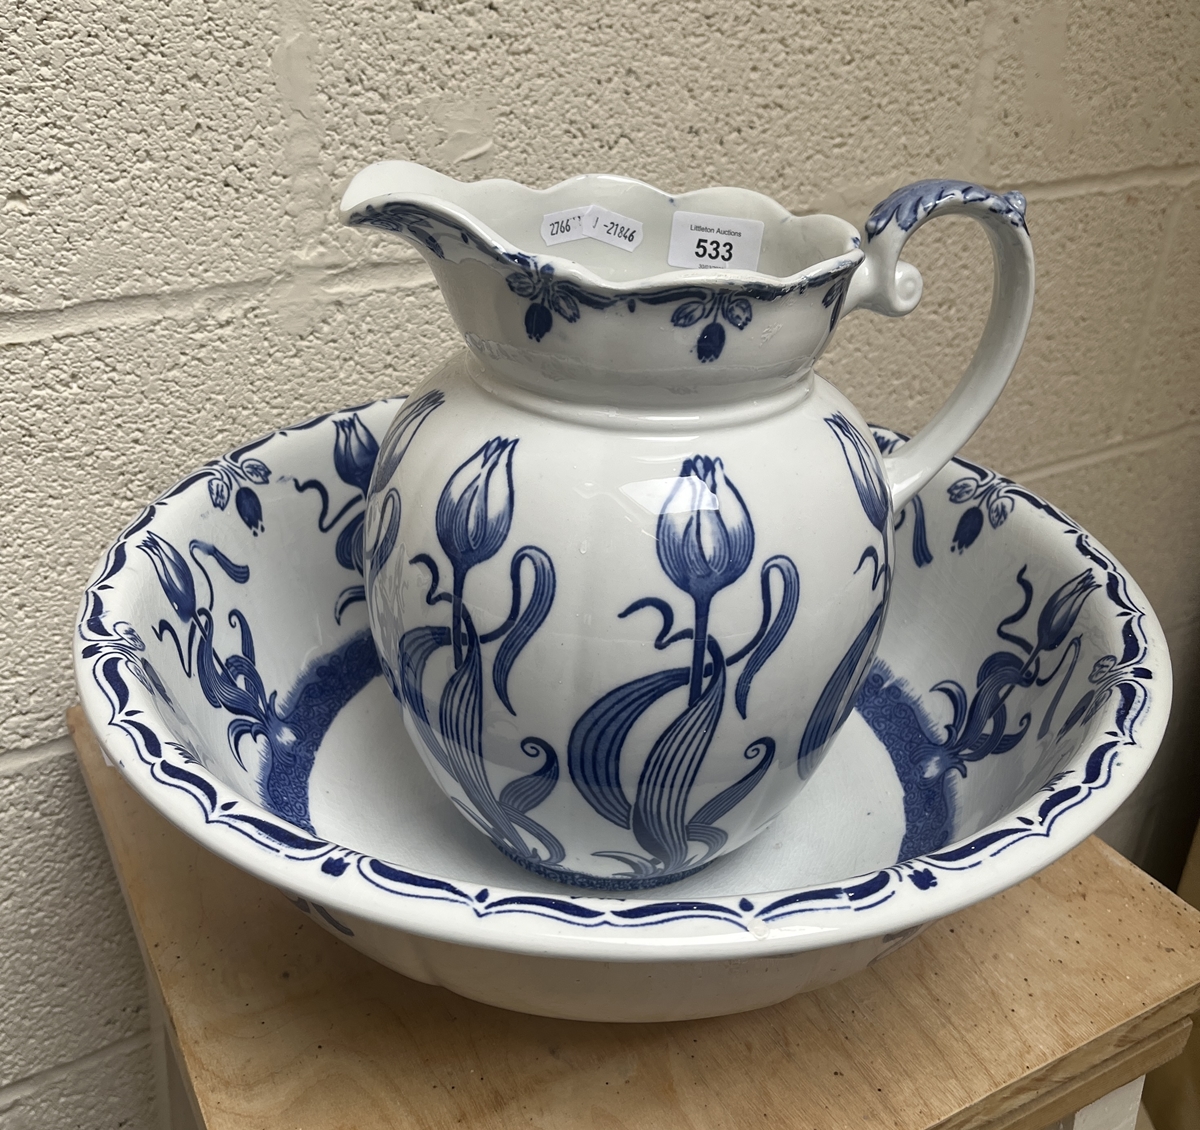 Vintage Art Nouveau blue and white floral jug and washbowl set